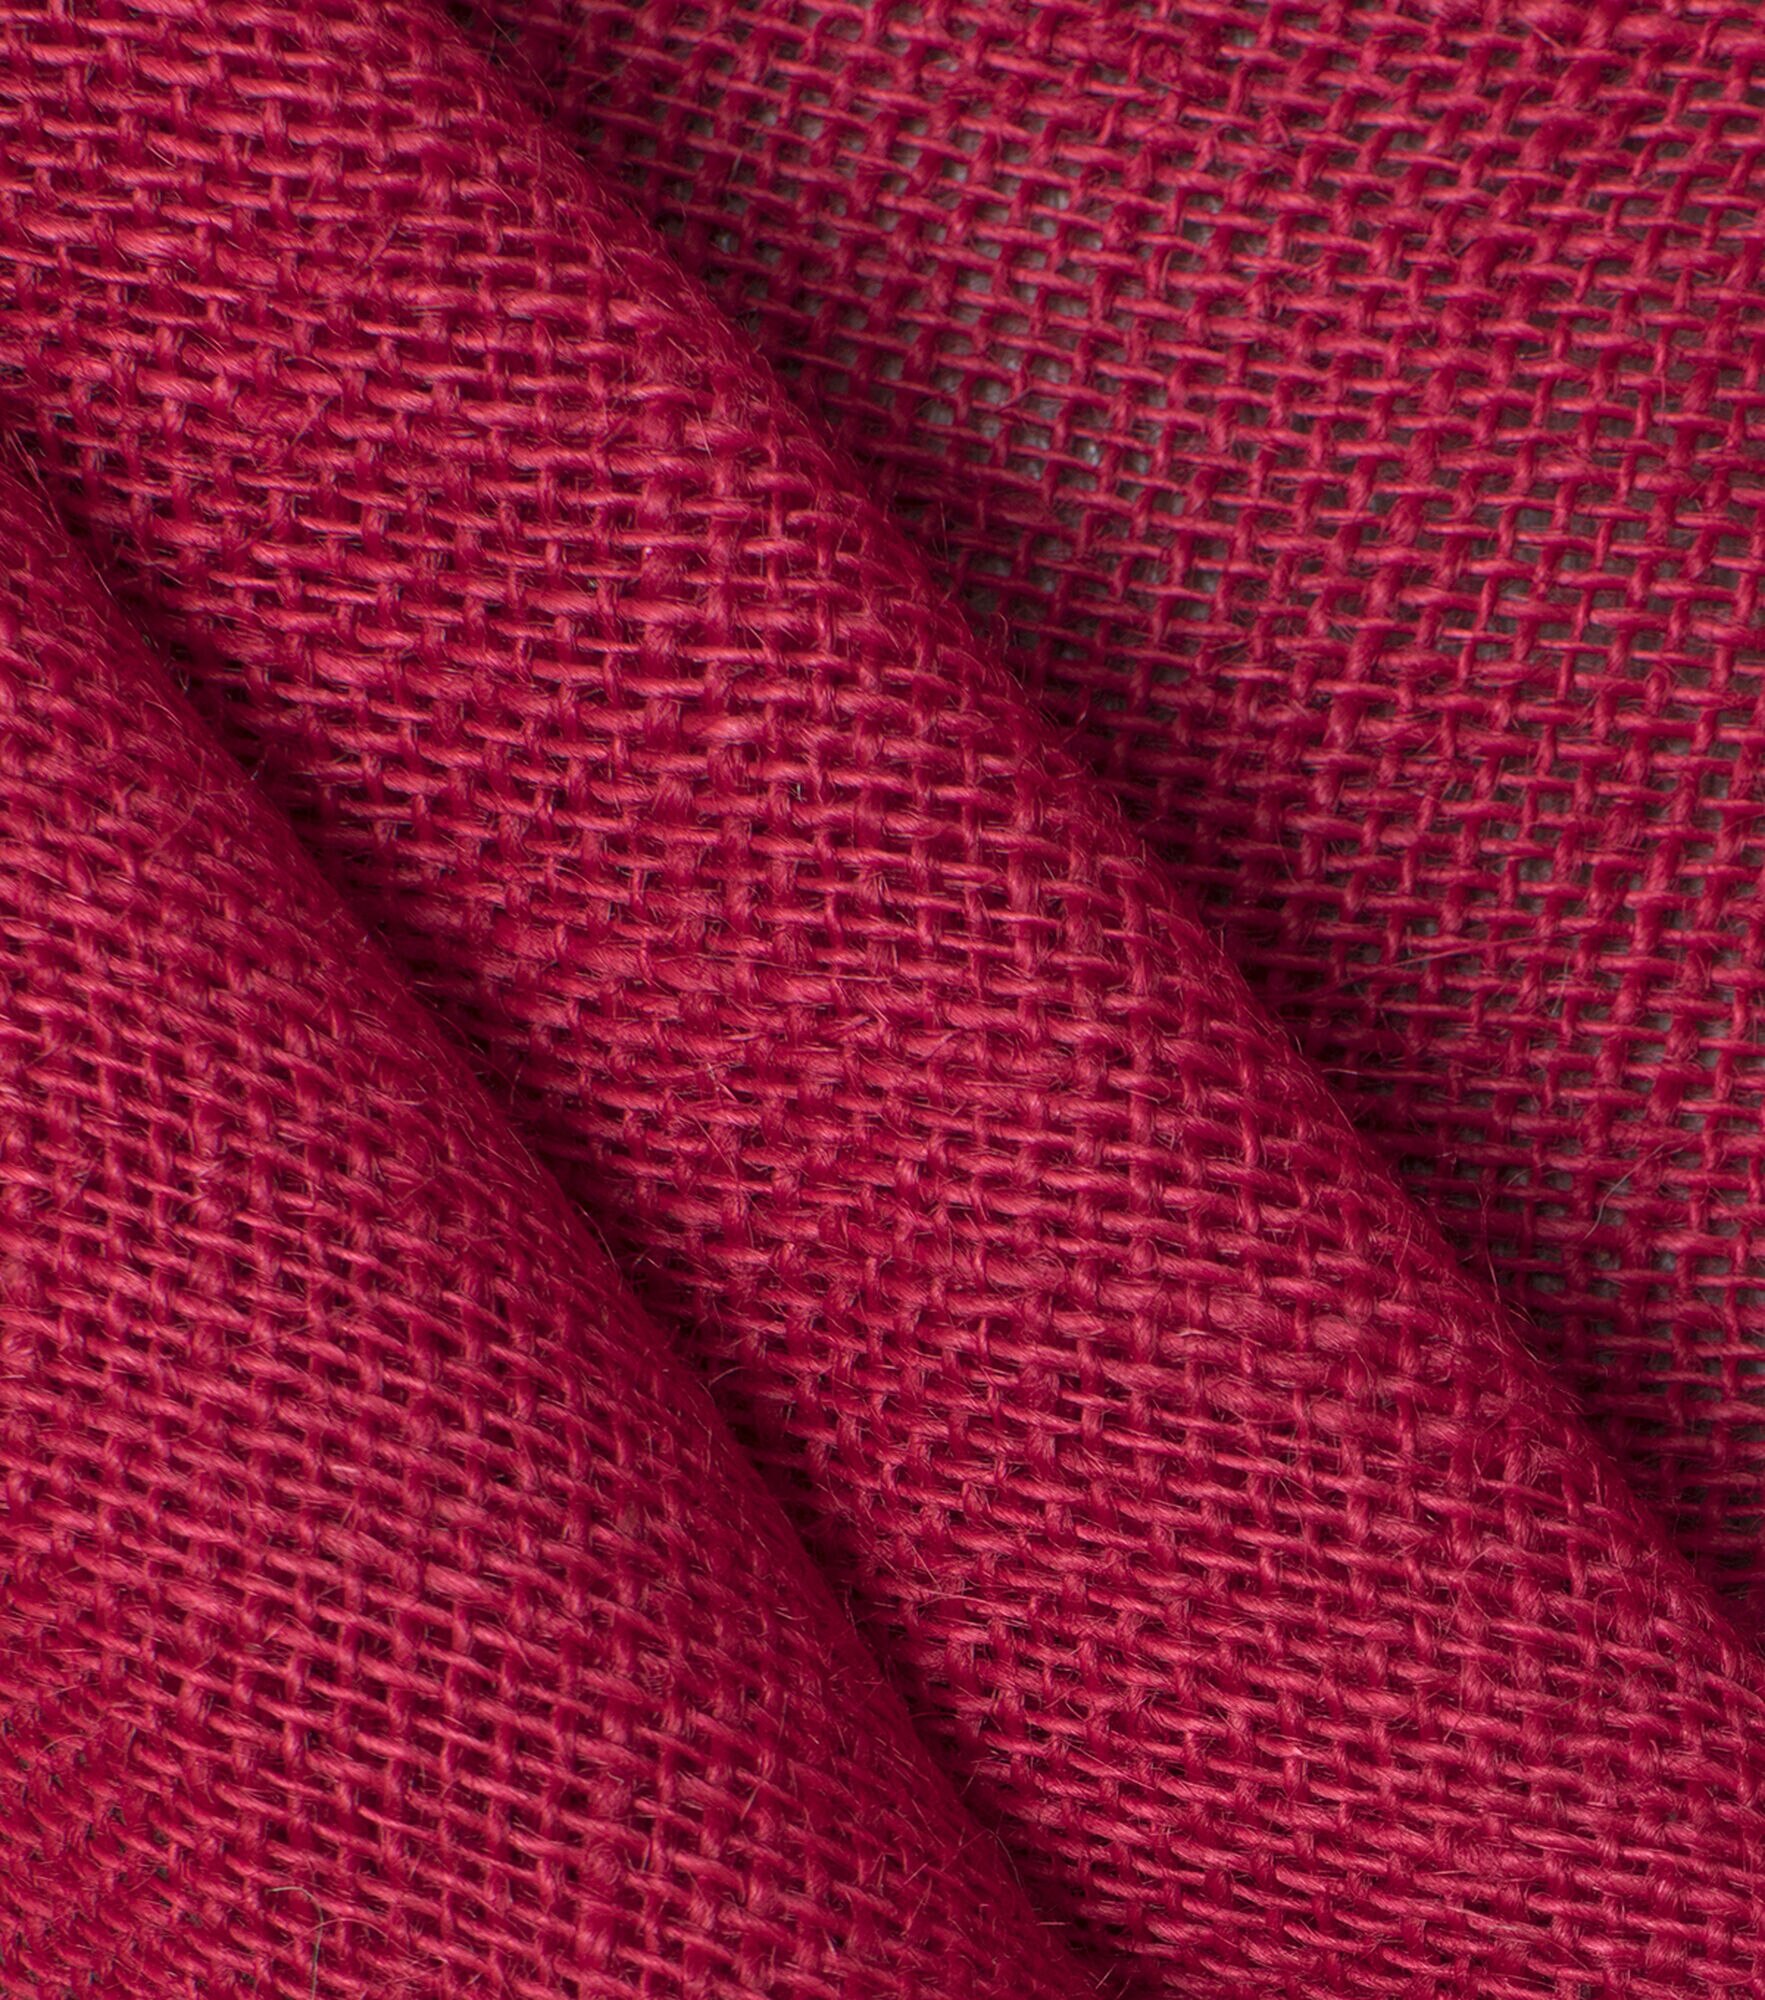  Burlapper Burlap Table Runner Fabric Roll, 12 Inch x